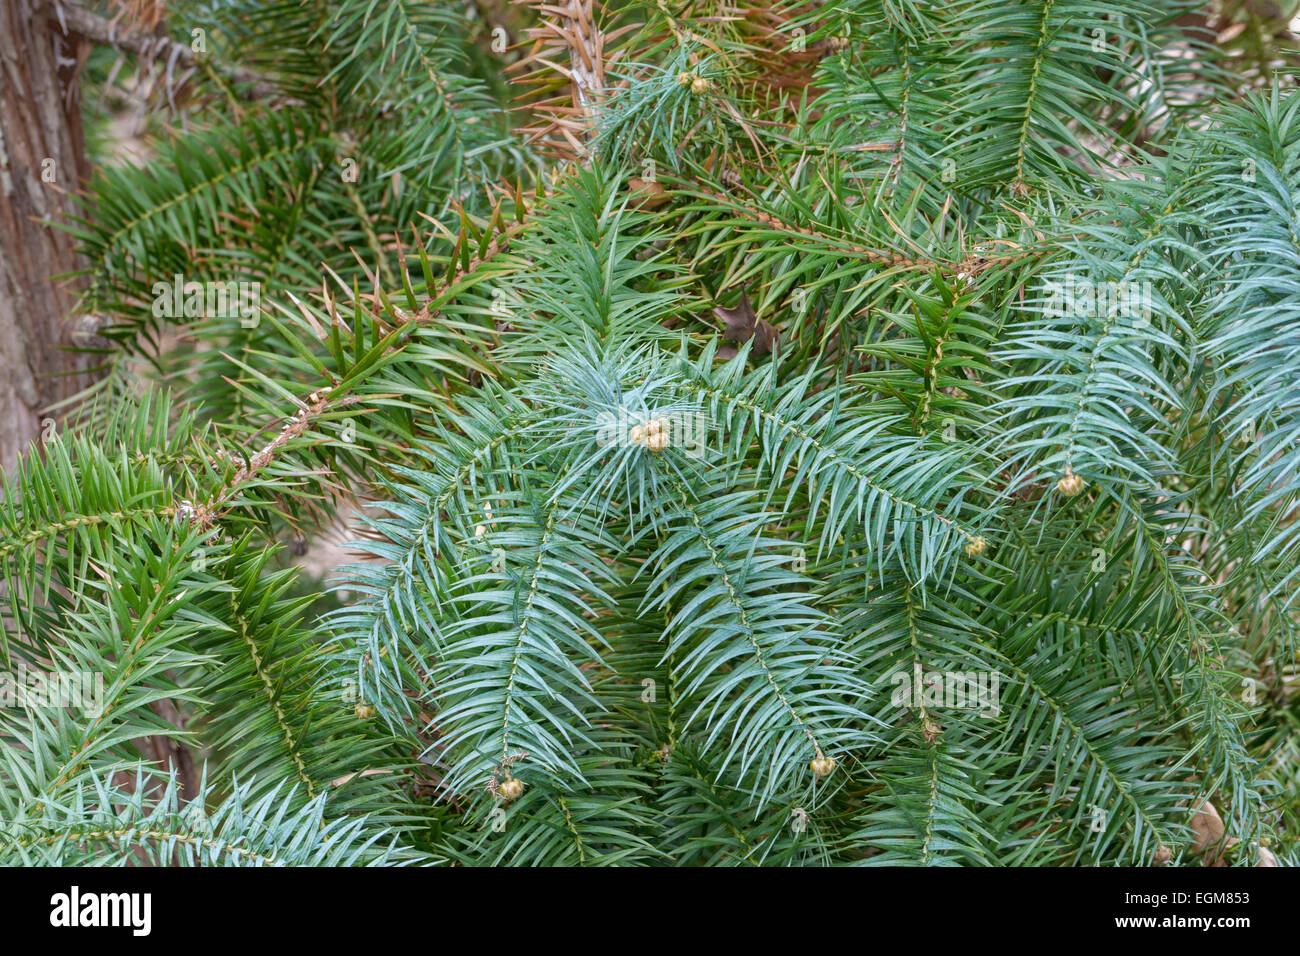 Chinese fir (Cunninghamia lanceolata “Glauca”) Stock Photo